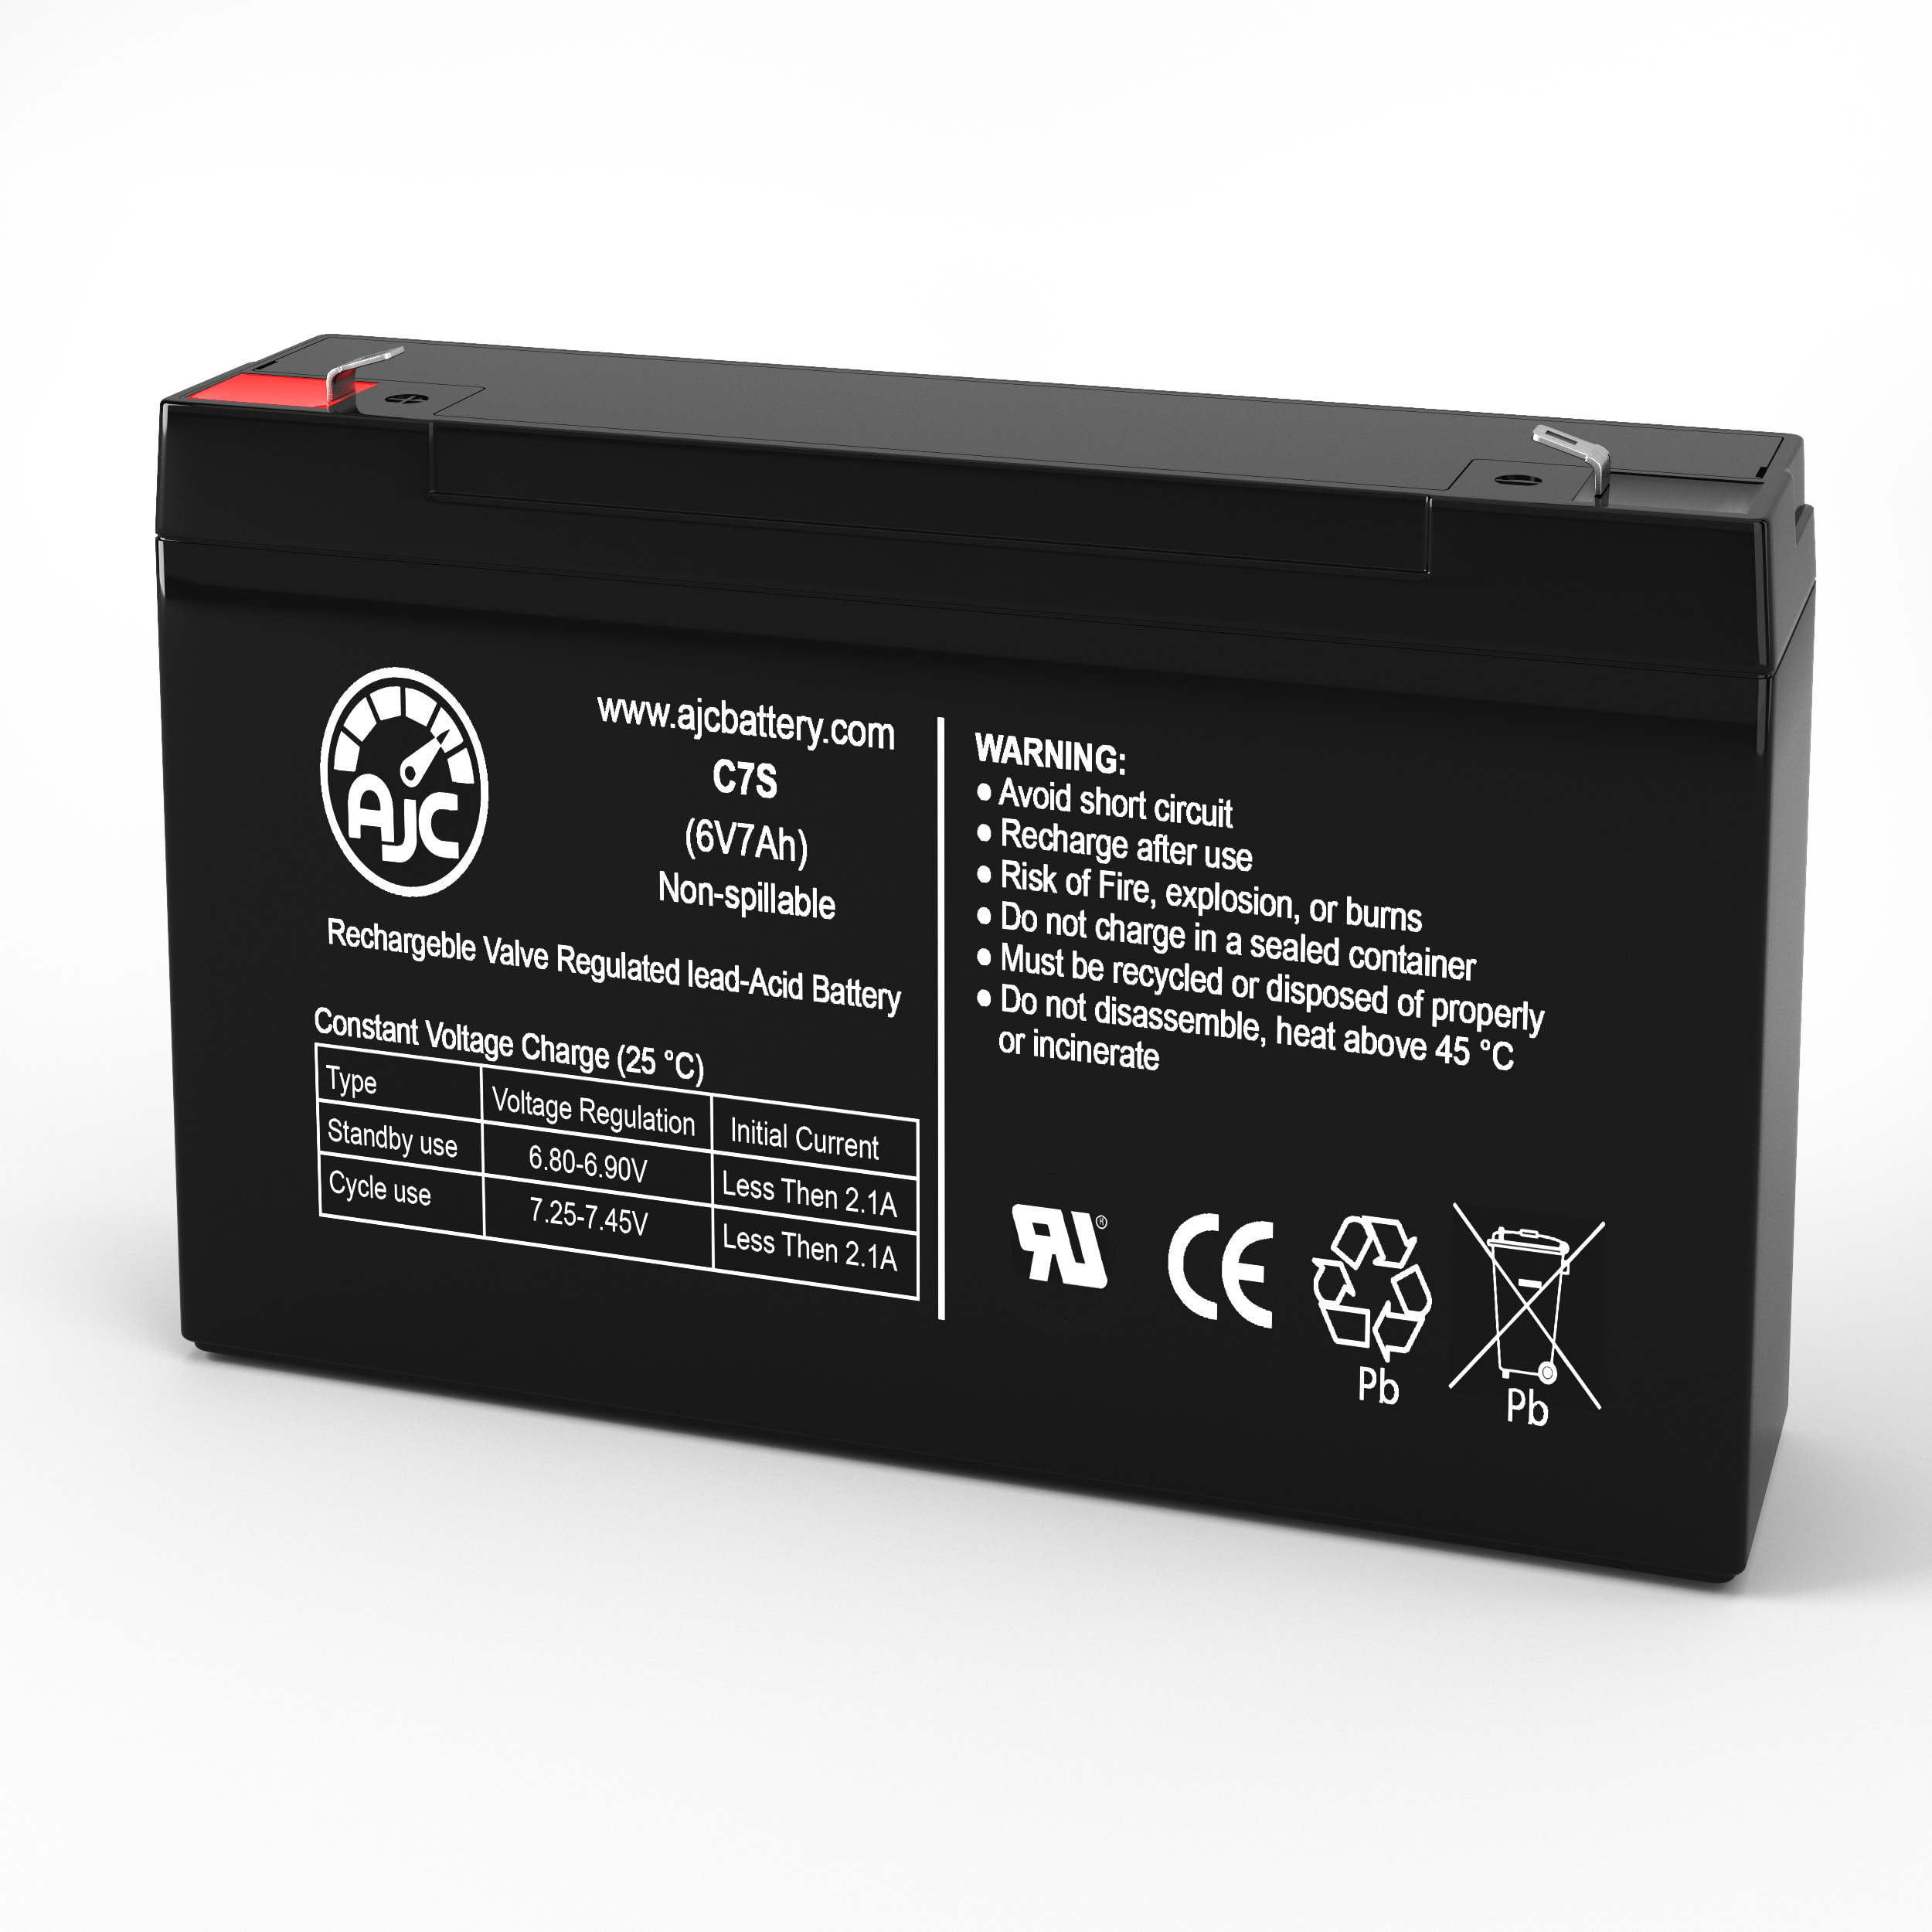 APC Smart-UPS 750 Rack Mount 1U EMC750RI1 Compatible Replacement Battery Kit 